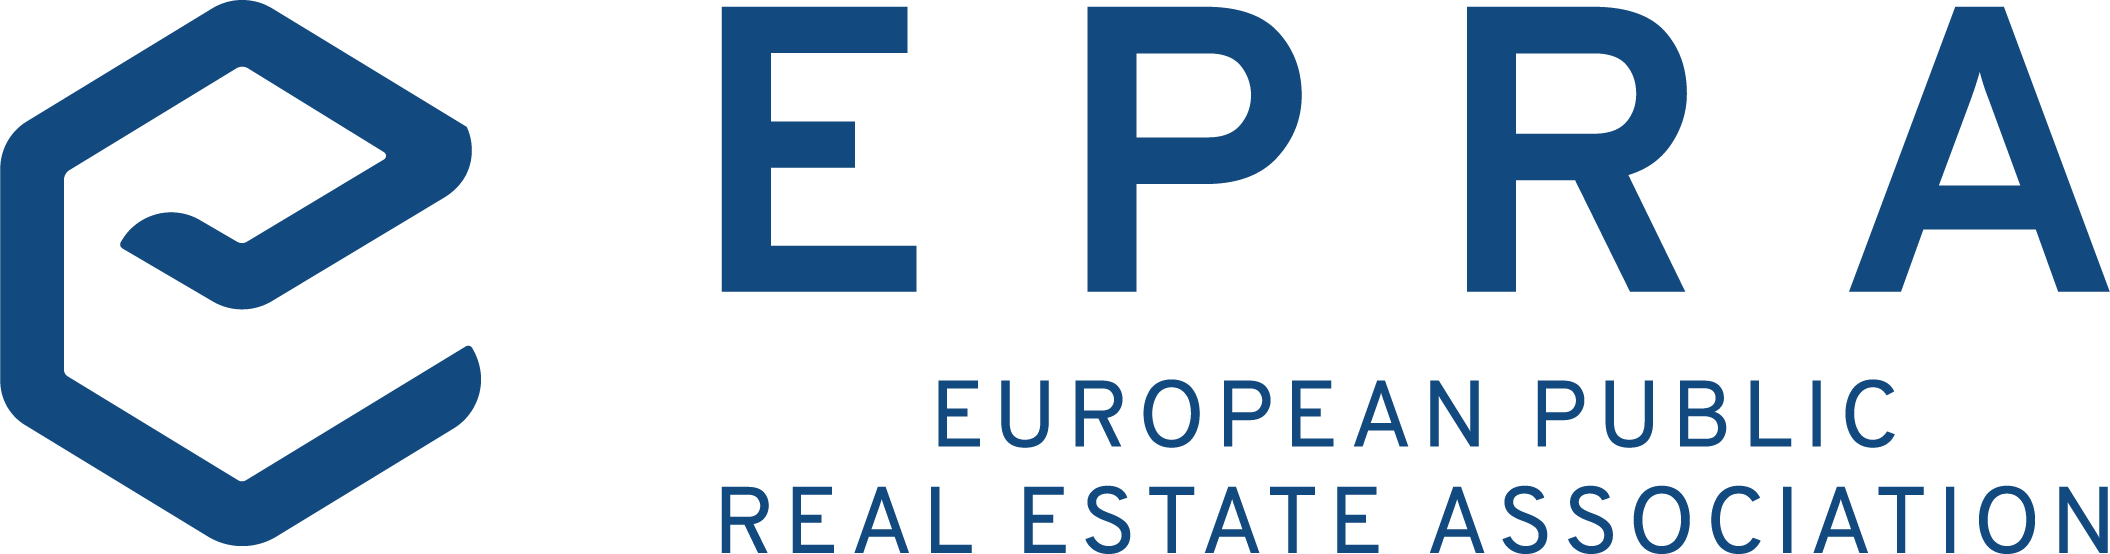 EPRA-logo-horizontal-lockup-blue